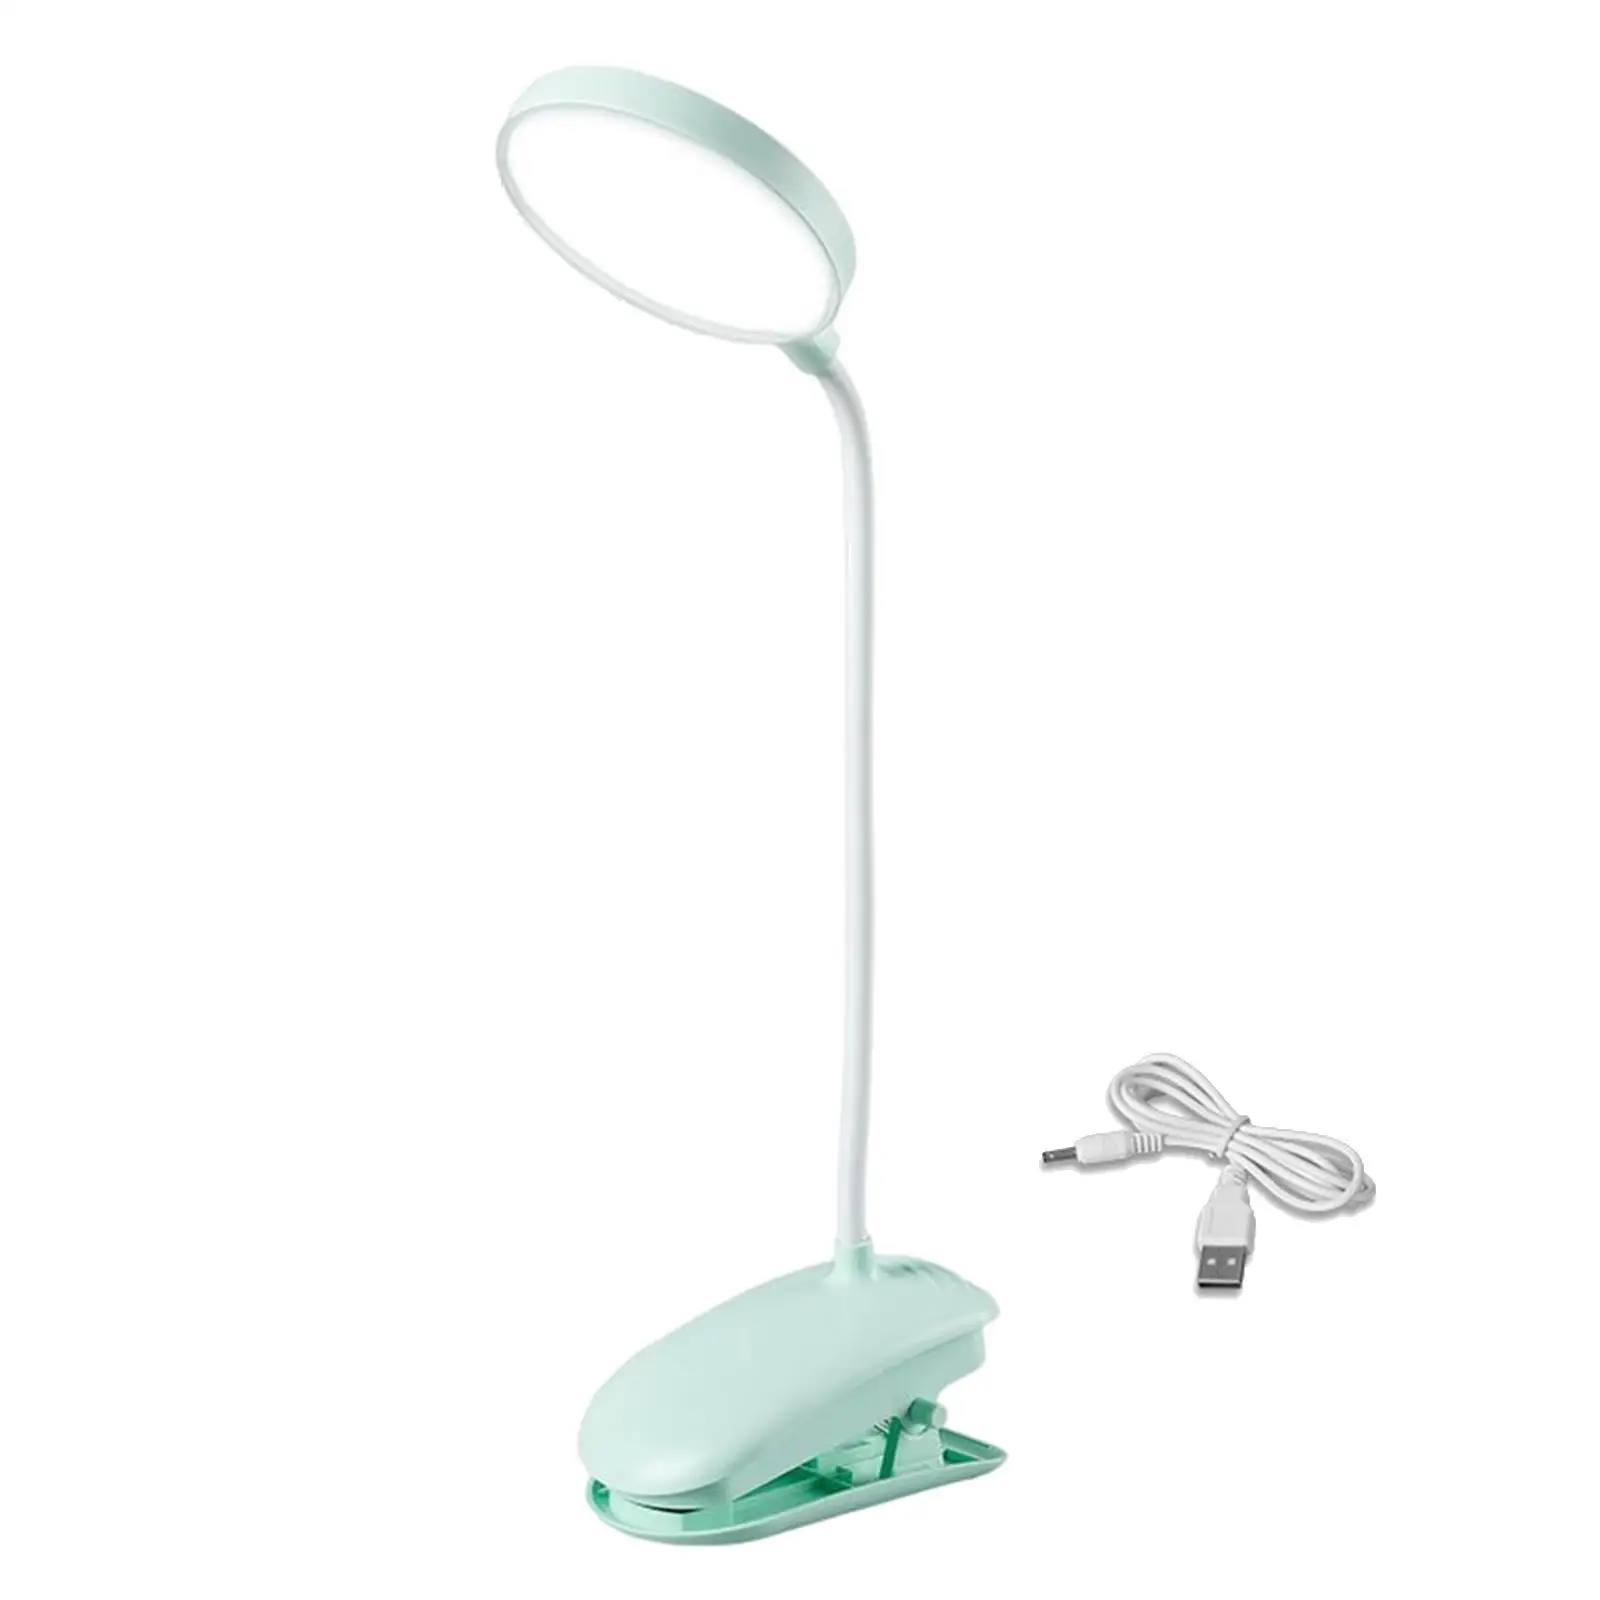 LED Desk Light Table Lamp Clip On Reading Lamp USB Dimming Adjustable Eye Protection Clamp Light for Study Dorm Bedroom Office